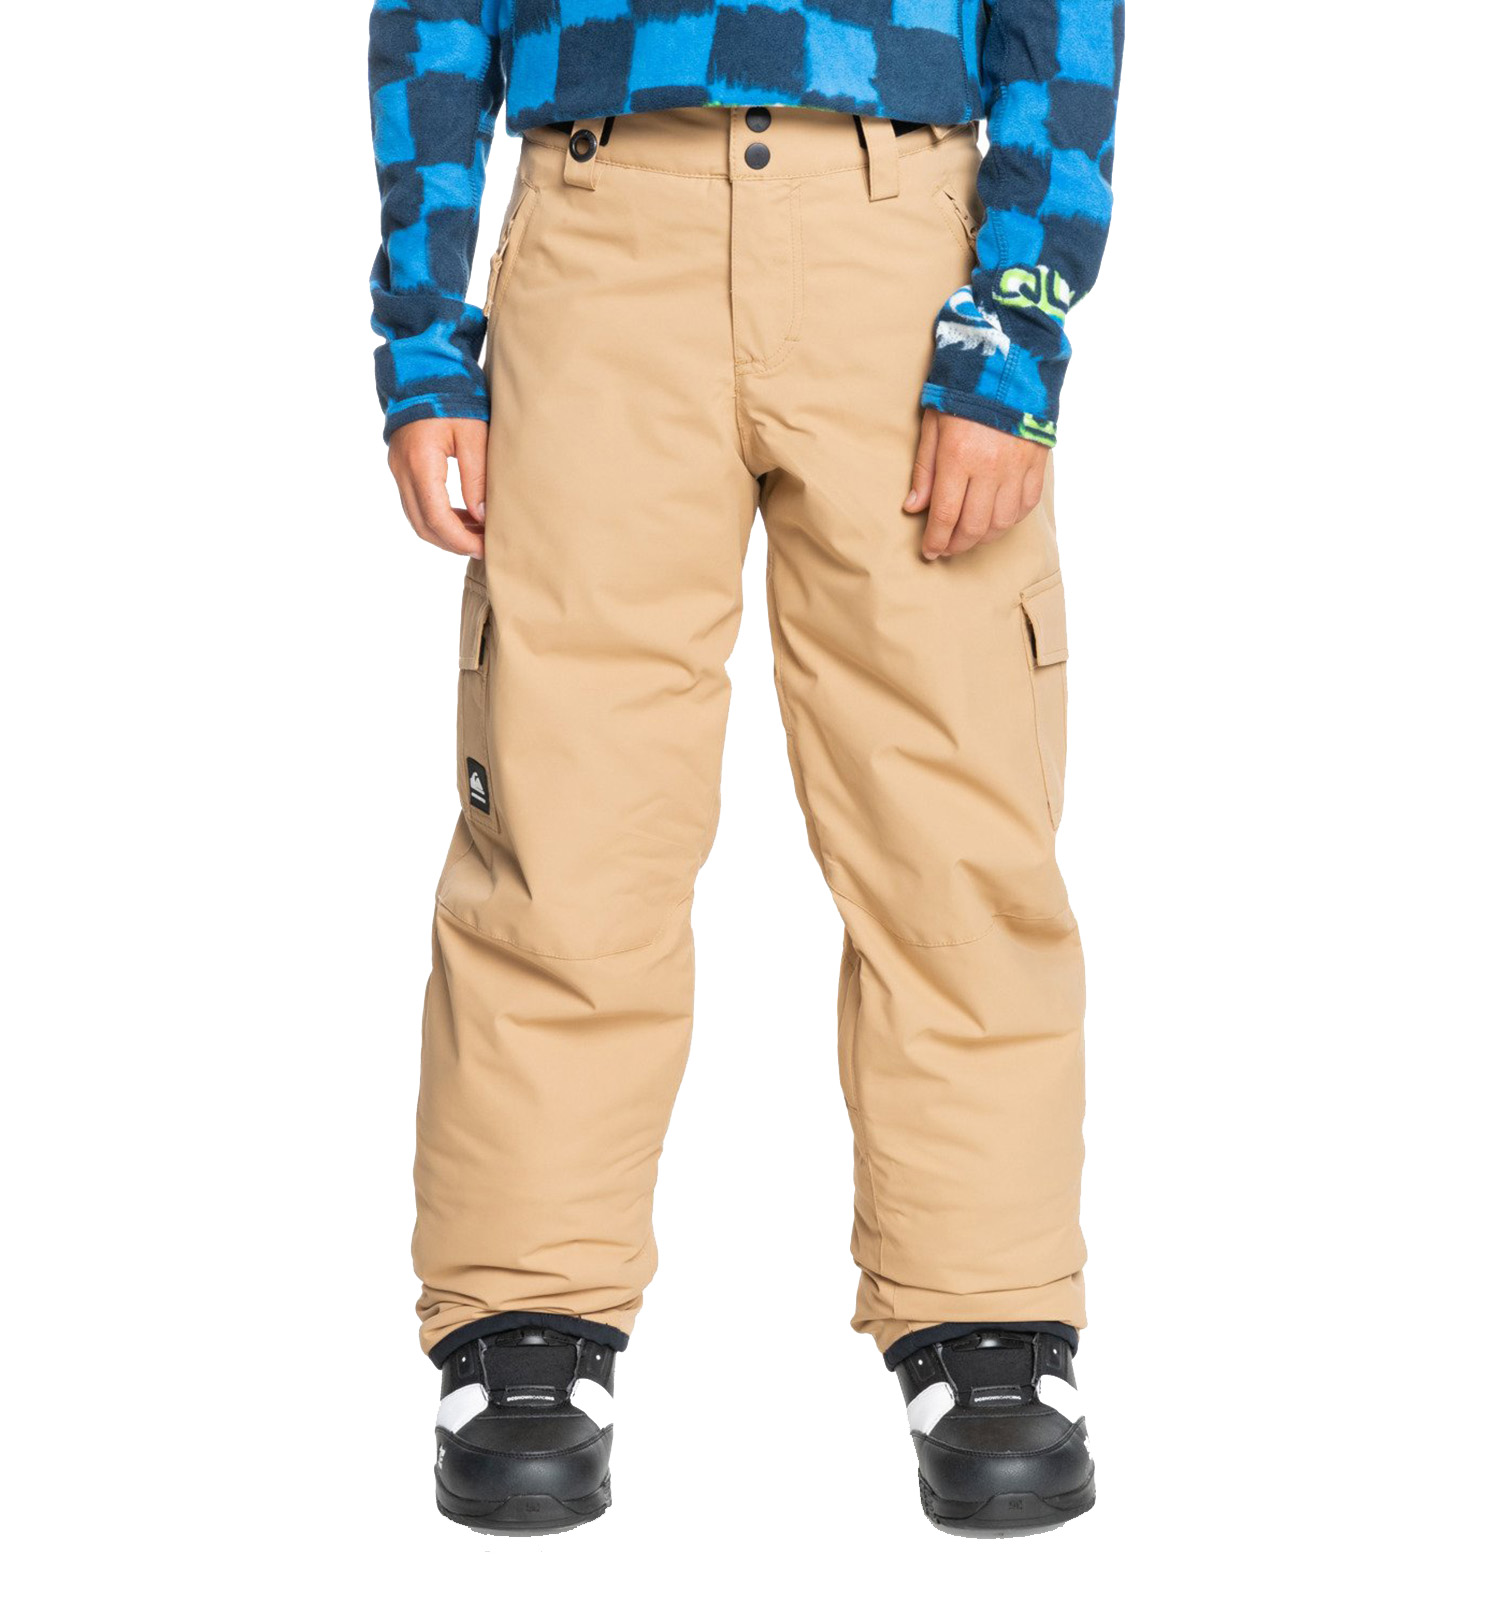 Quiksilver Porter Çocuk Snowboard Pantalonu - BEJ - 1